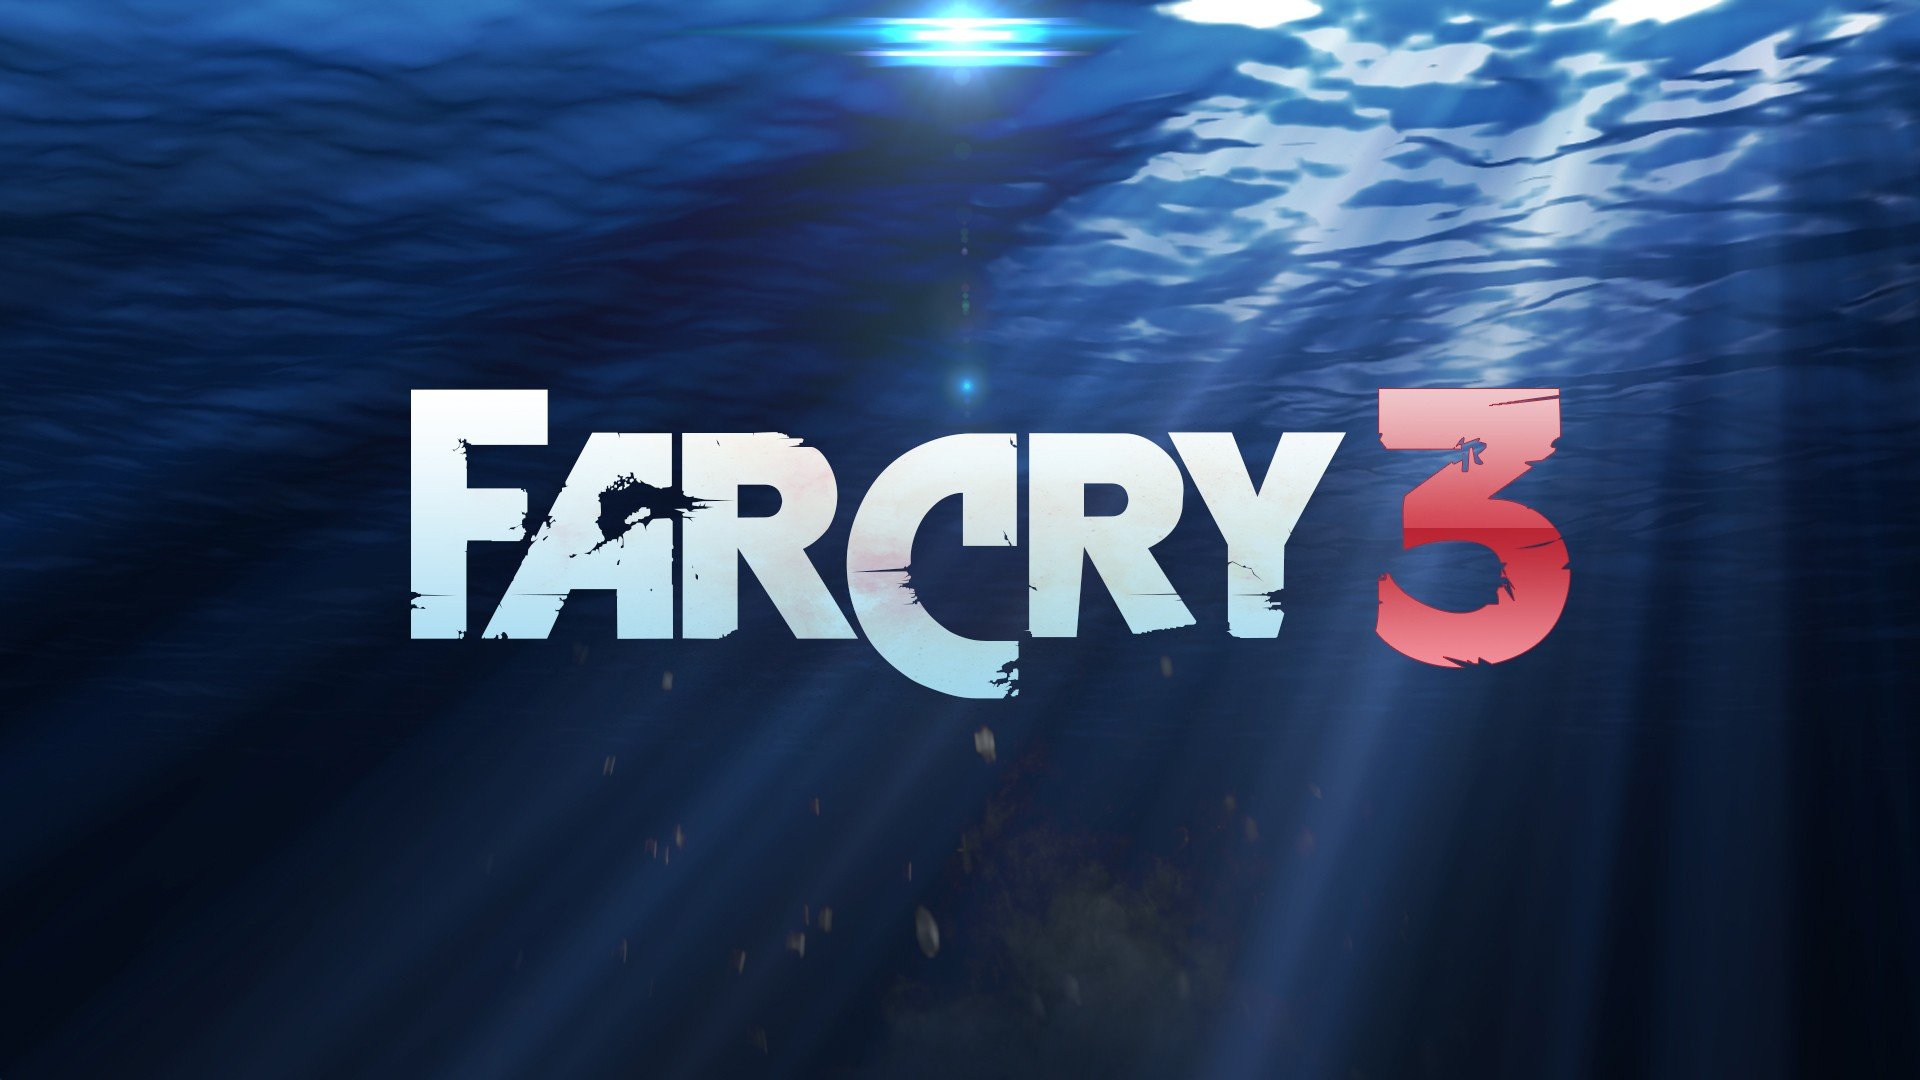 farcry 3, Logo, Videogame Wallpaper